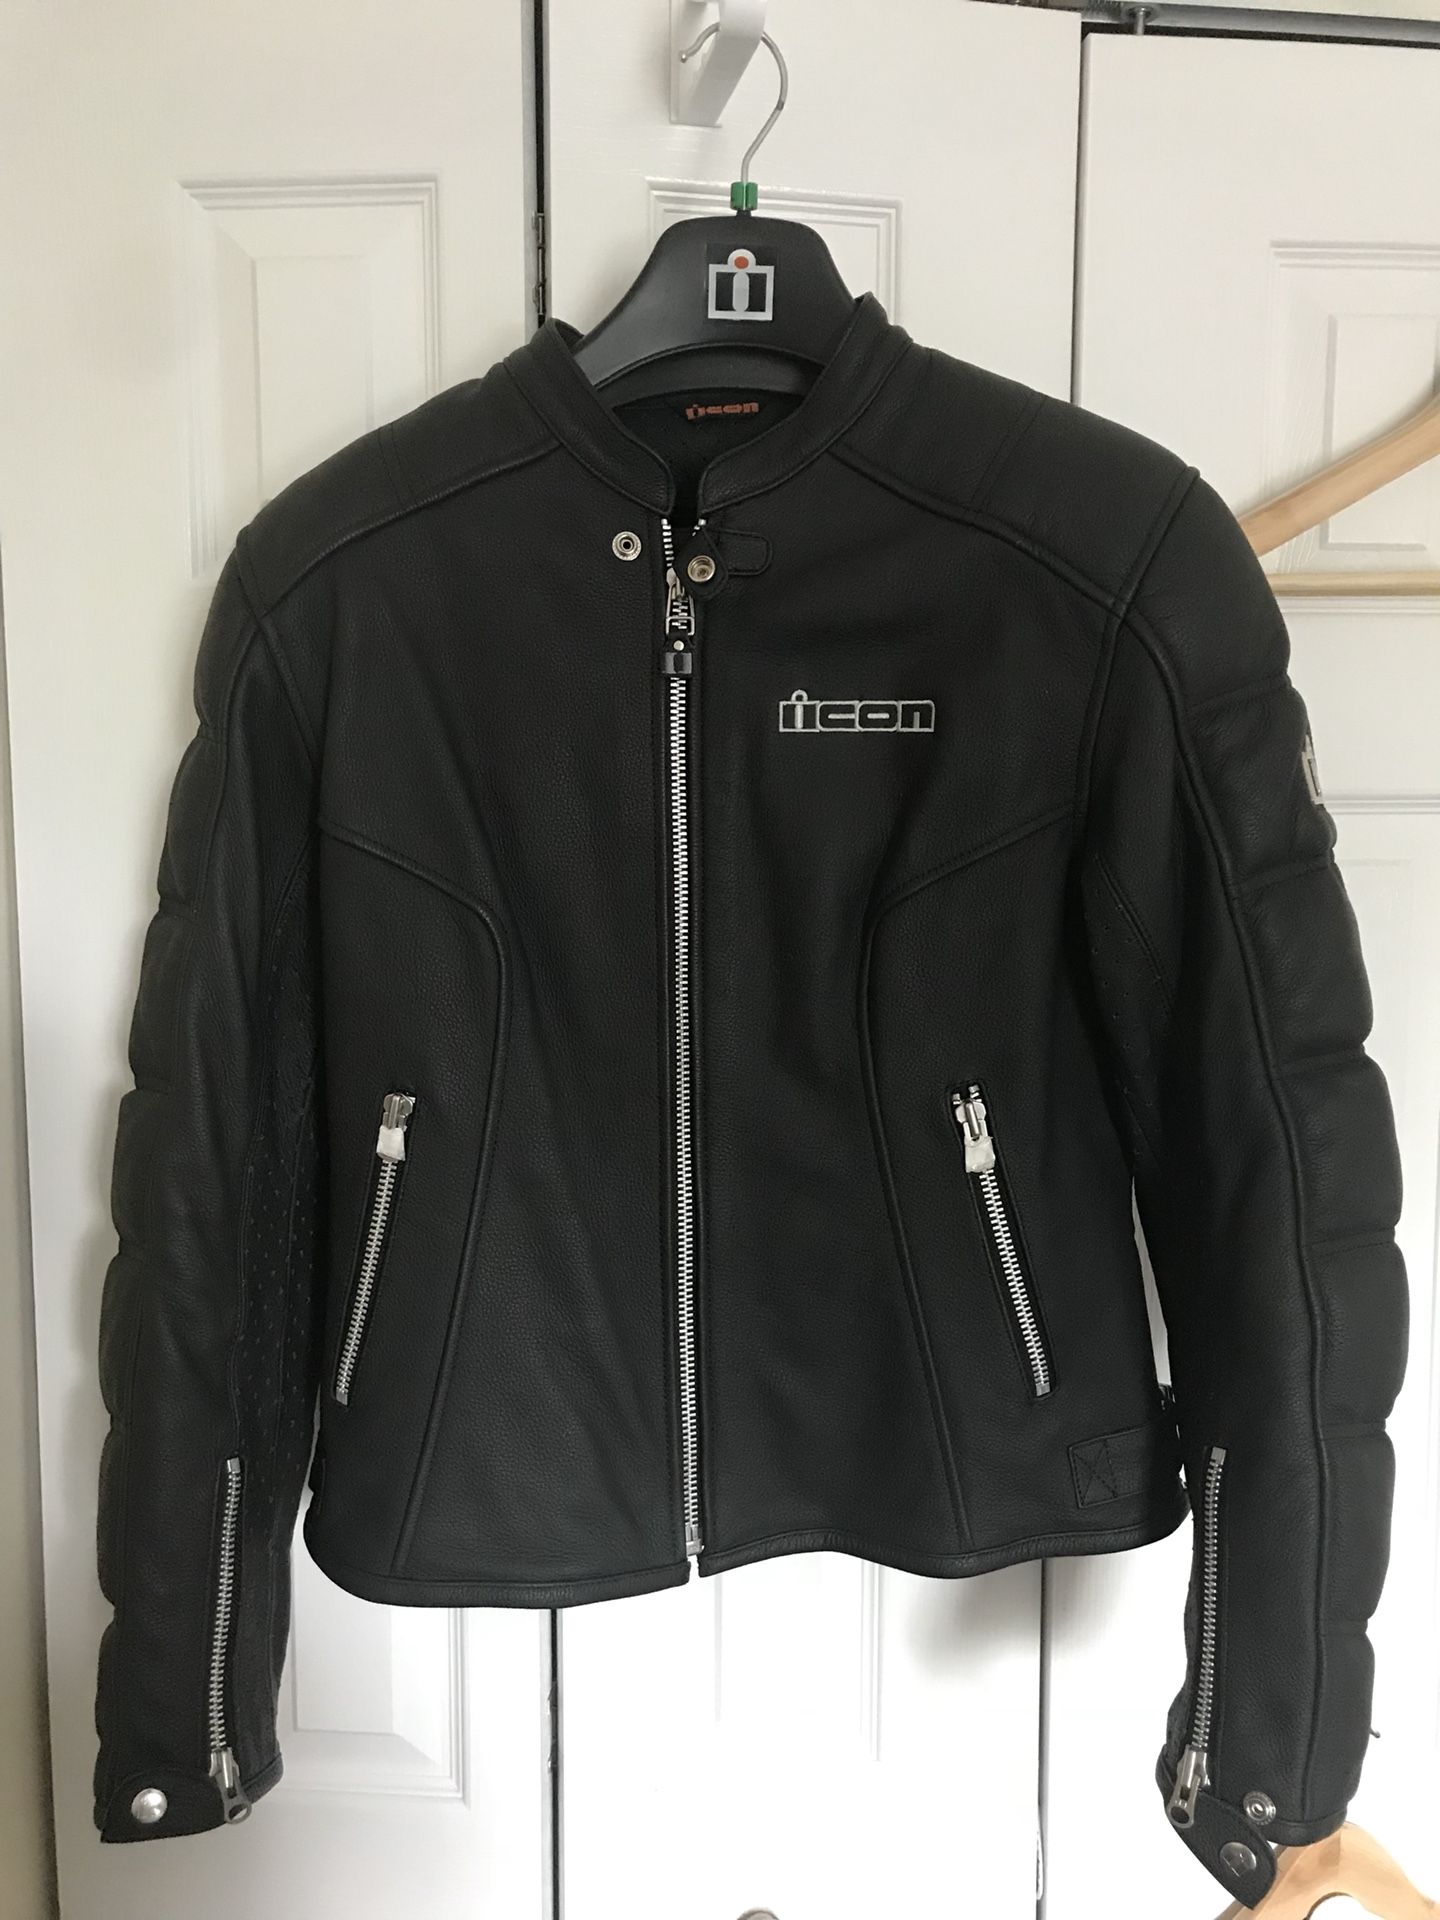 Bike jacket